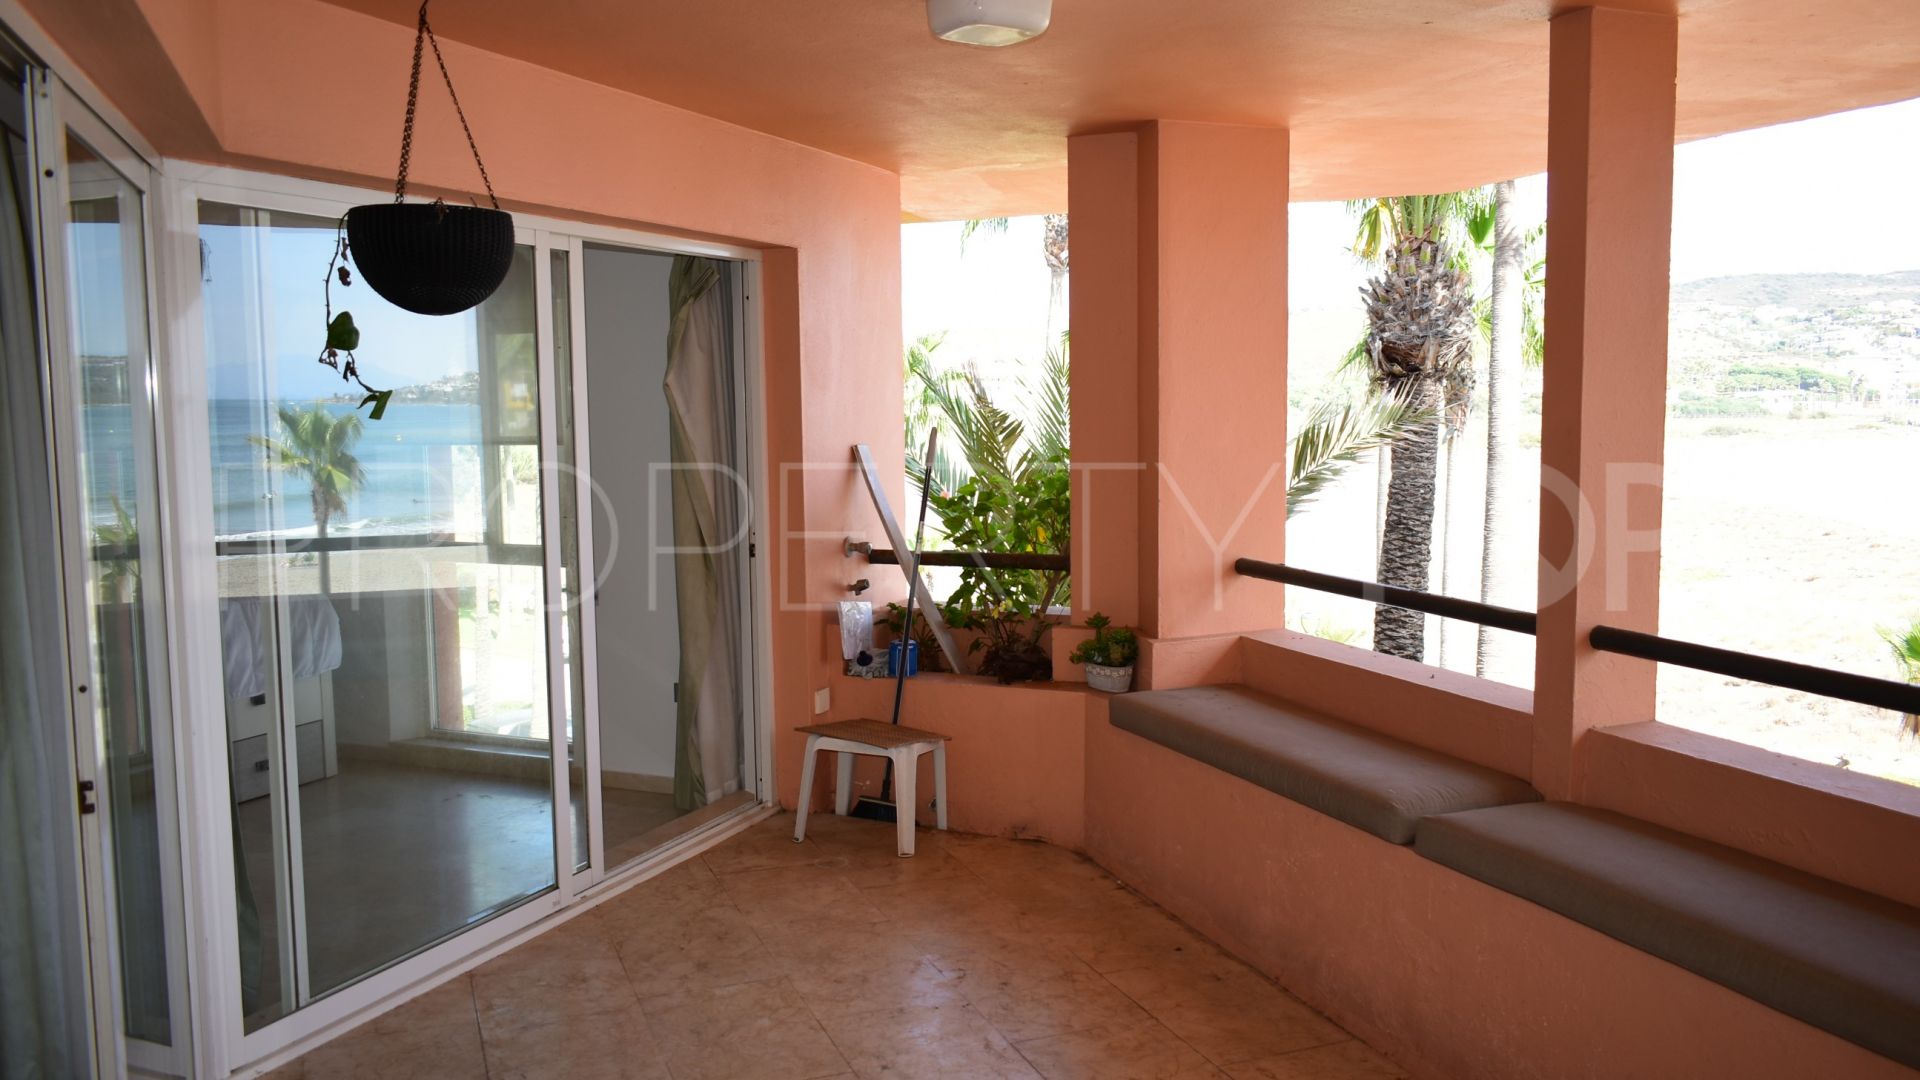 Sotogrande Puerto Deportivo apartment for sale